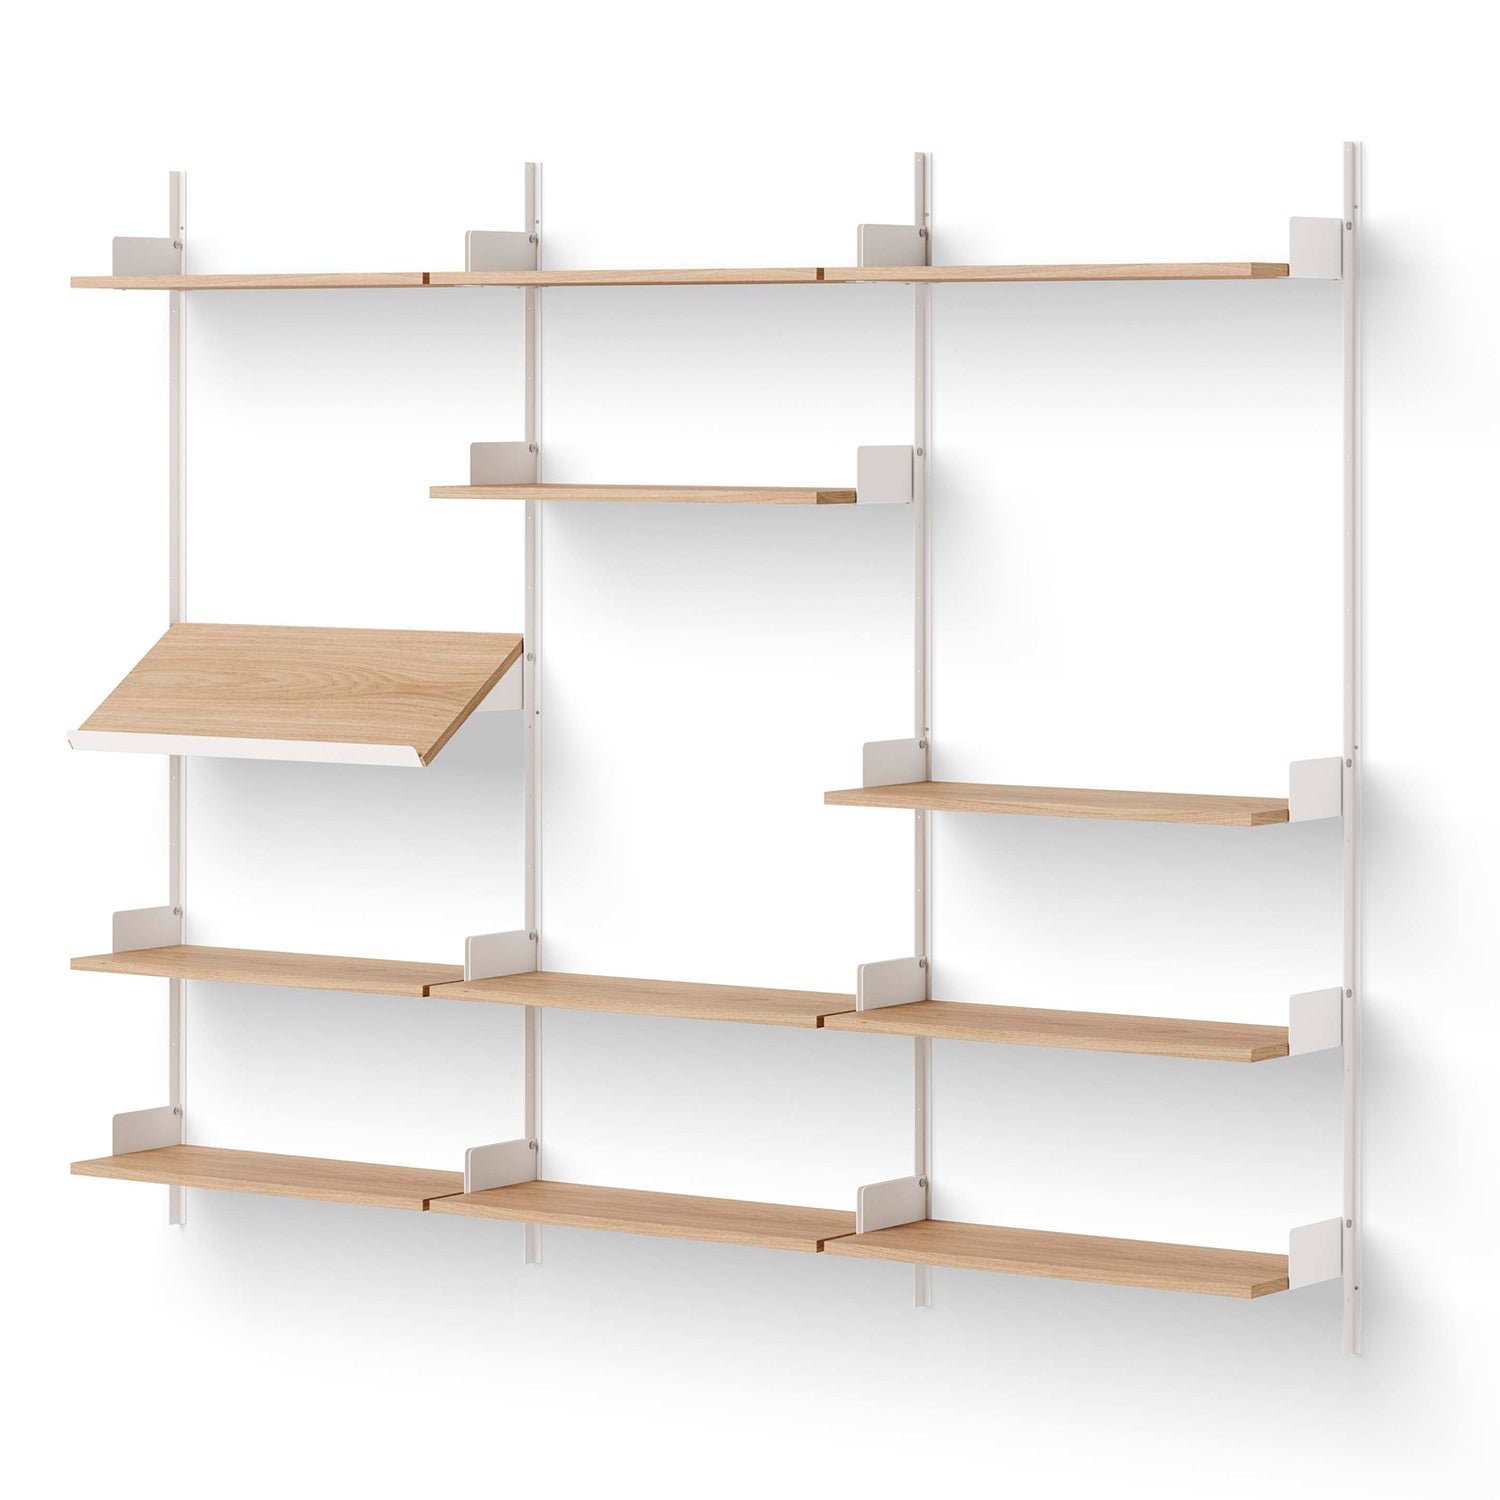 Display Shelf - The Design Choice